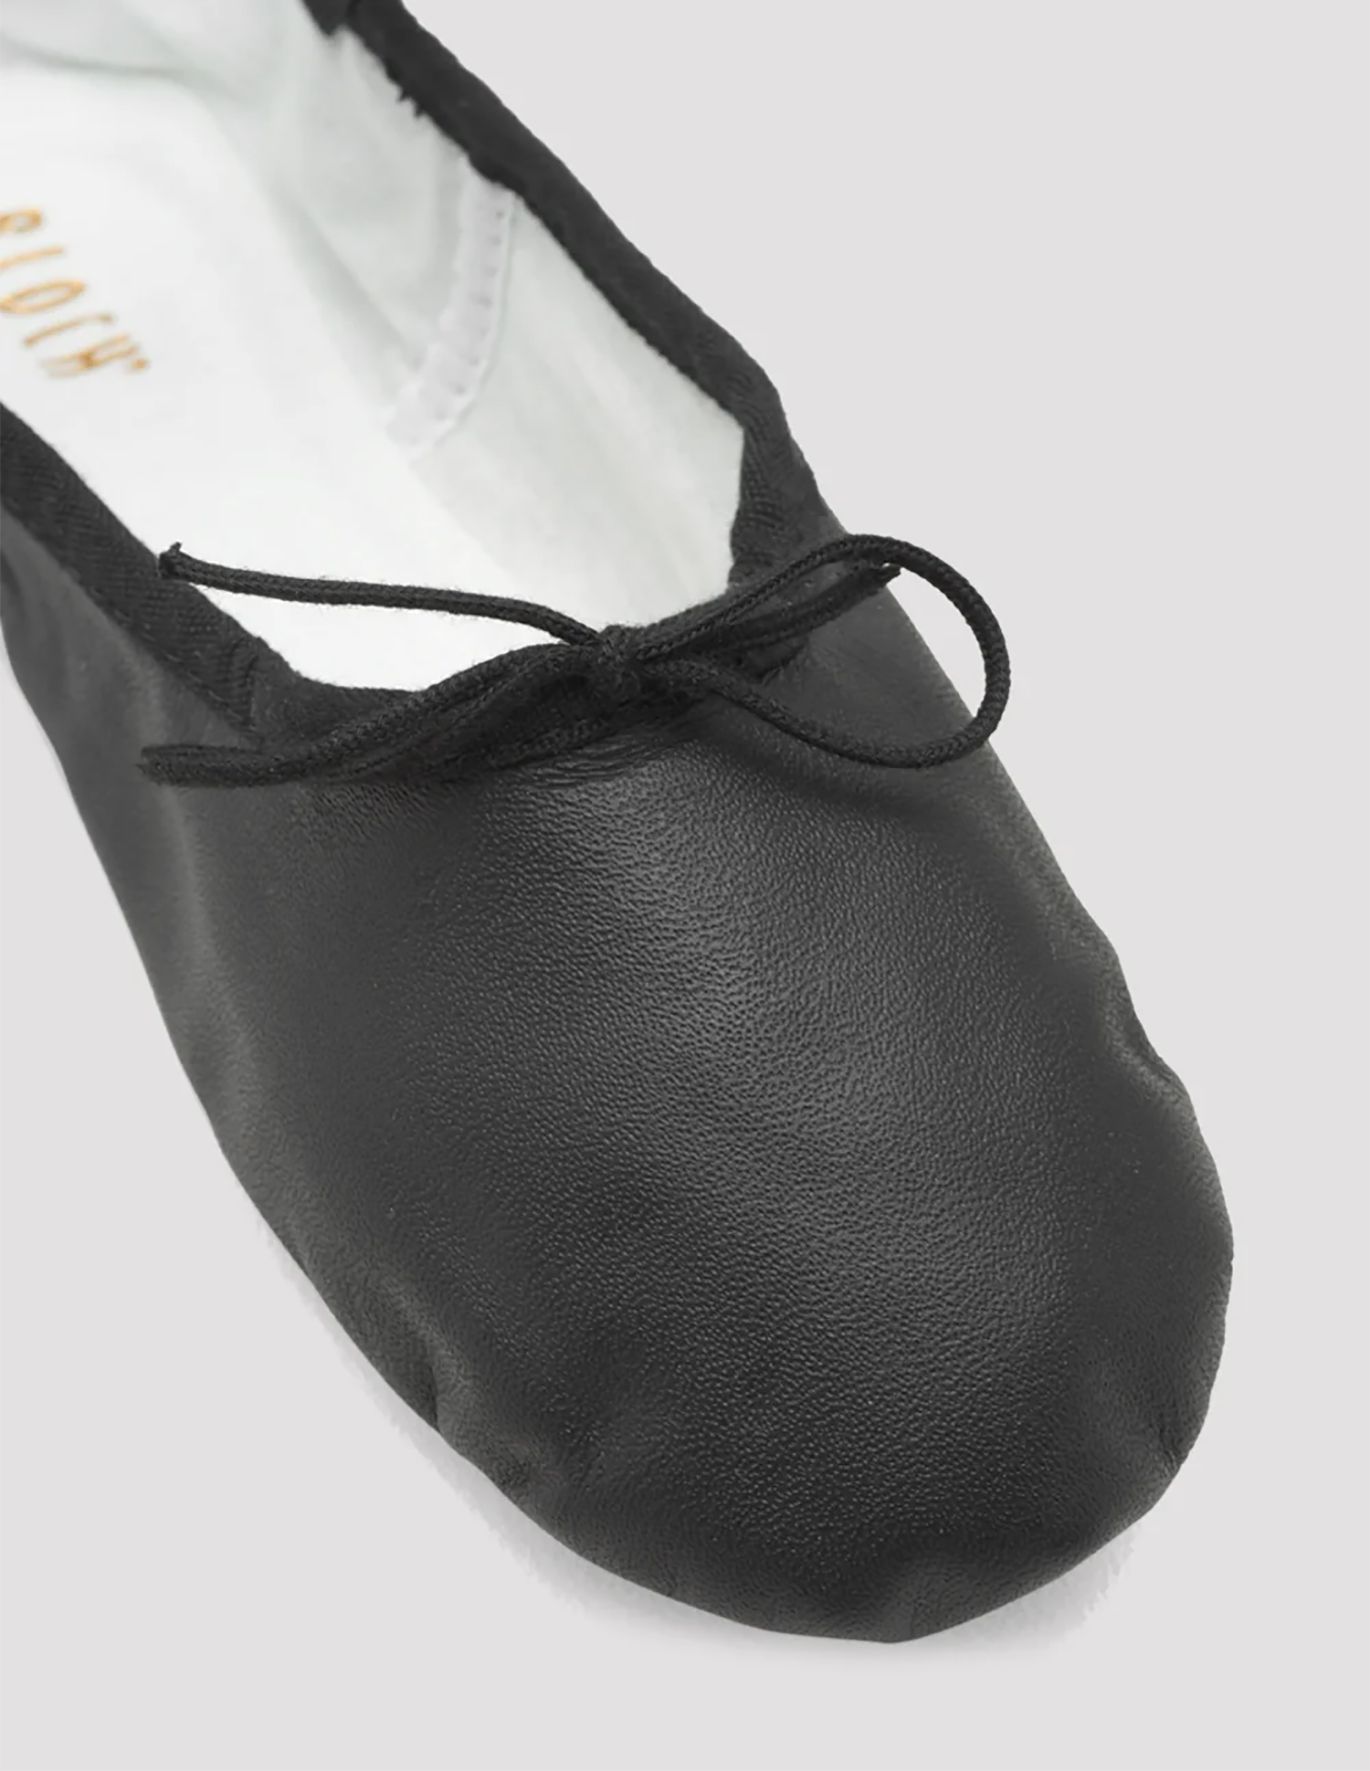 Bloch RAD Arise Full Sole Leather Ballet Shoe Model S0209